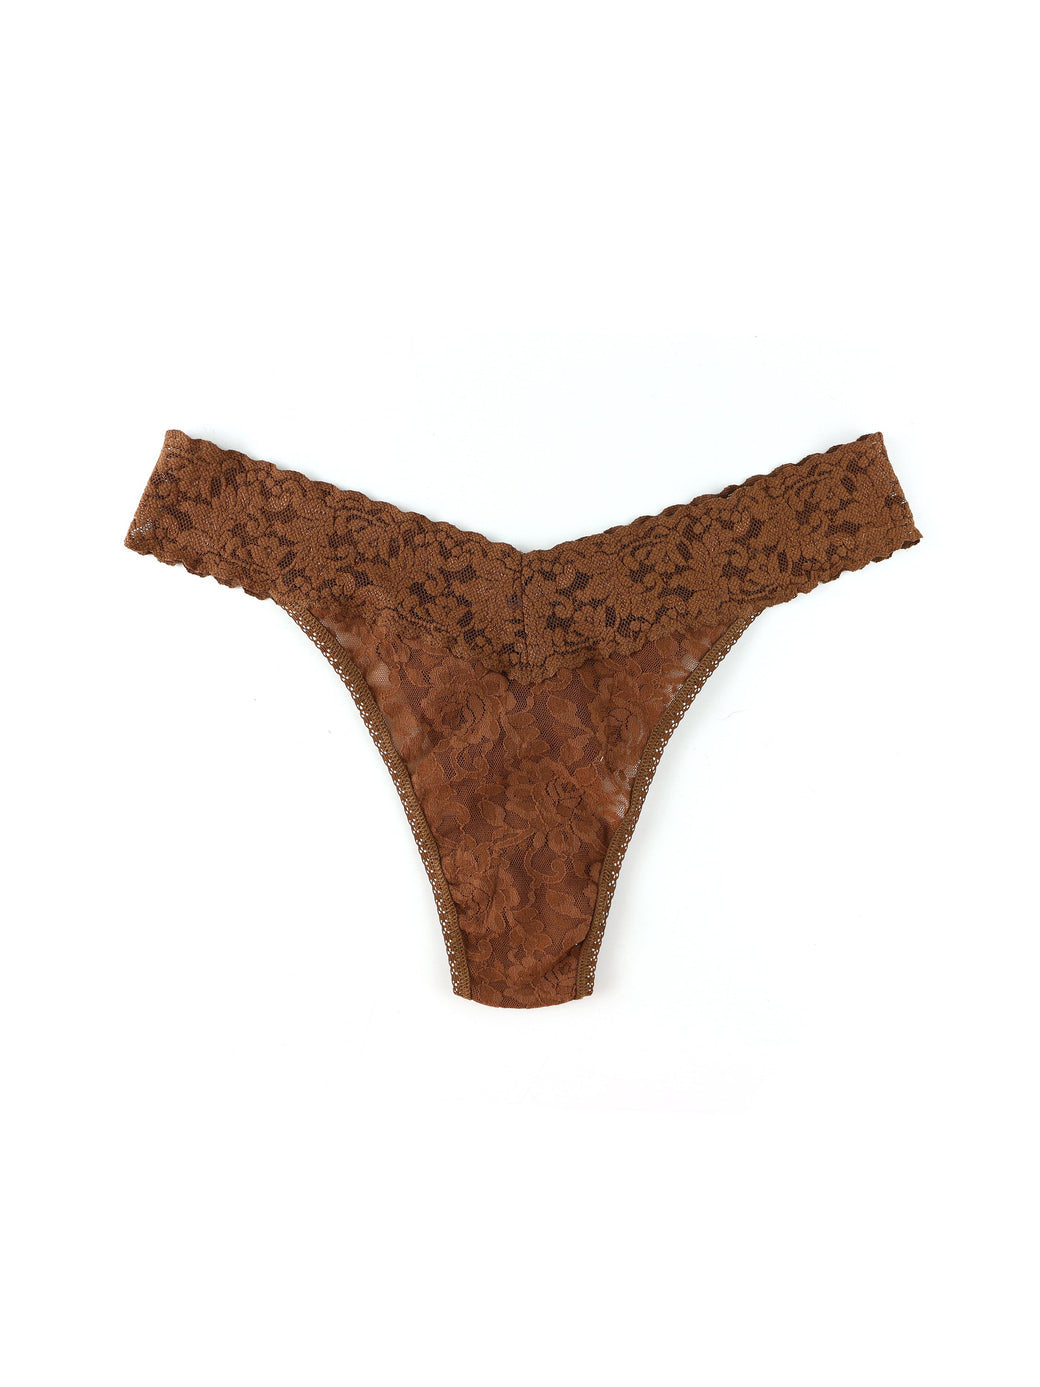 Hanky Panky Women's Original Lace Panty Thong Underwear, Brown, One Size